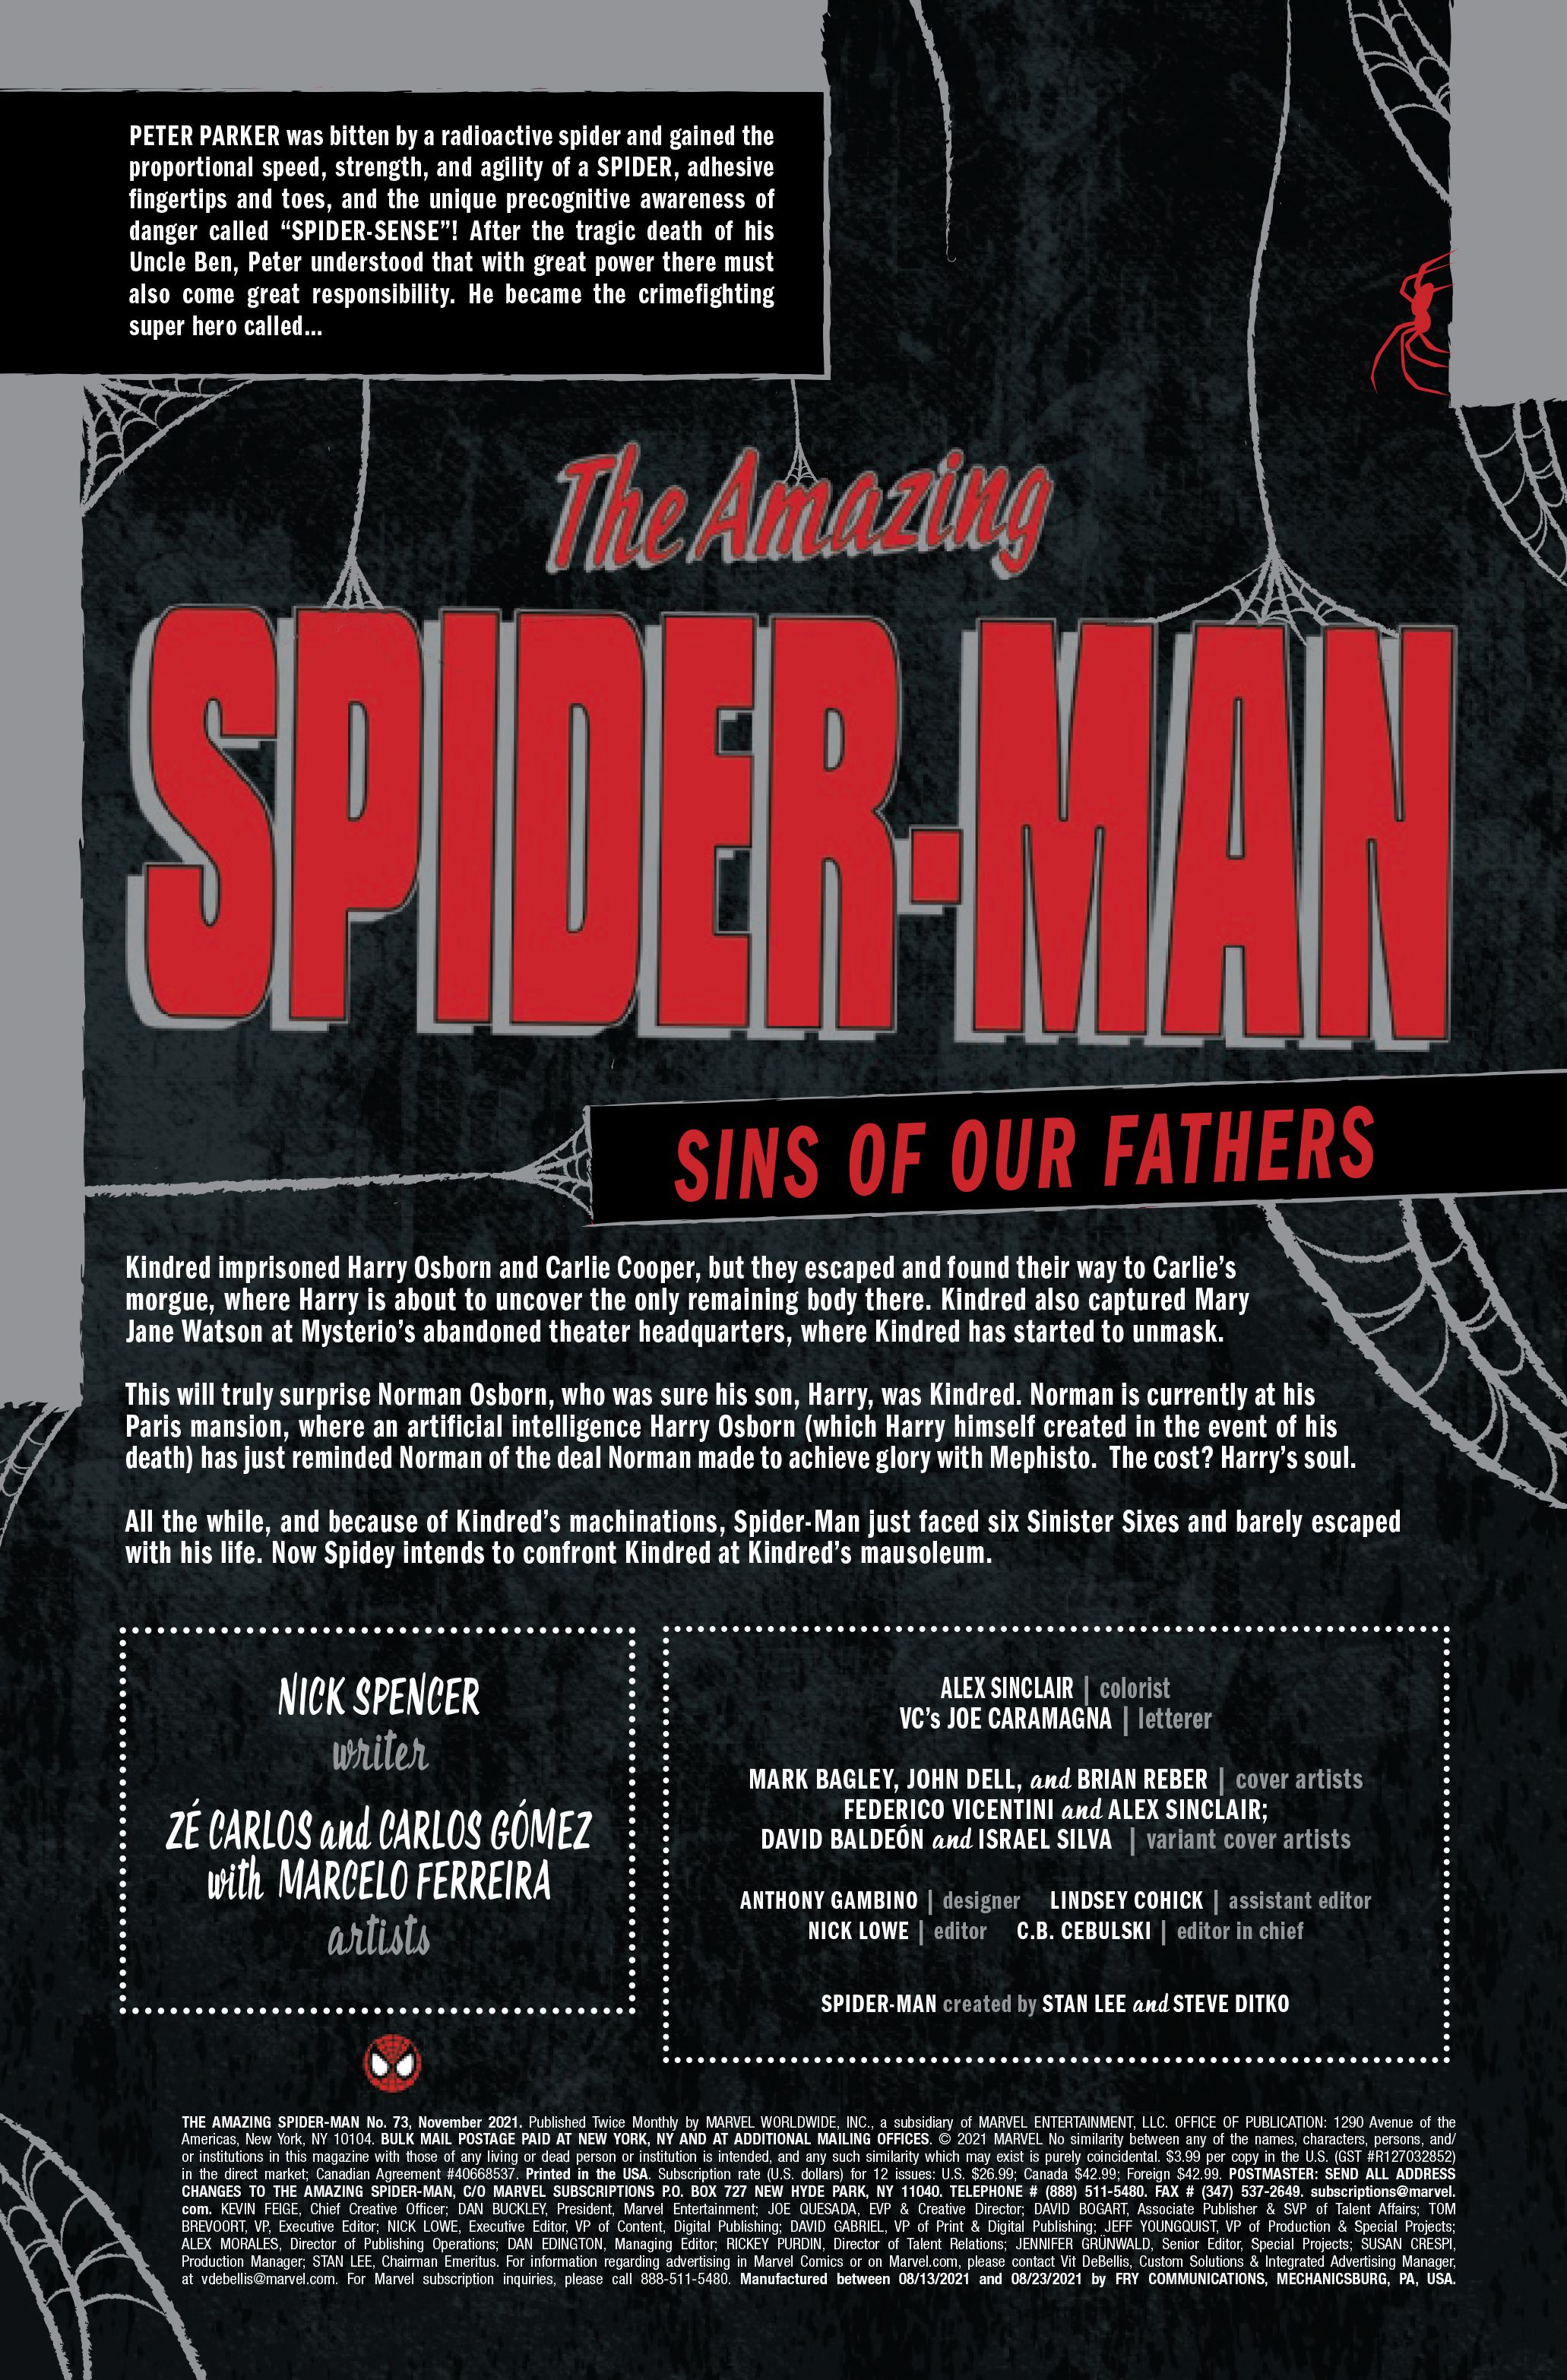 Page 1 of Amazing Spider-Man #73, by Nick Spencer, Zé Carlos, Carlos Gómez and Marcelo Ferreira.